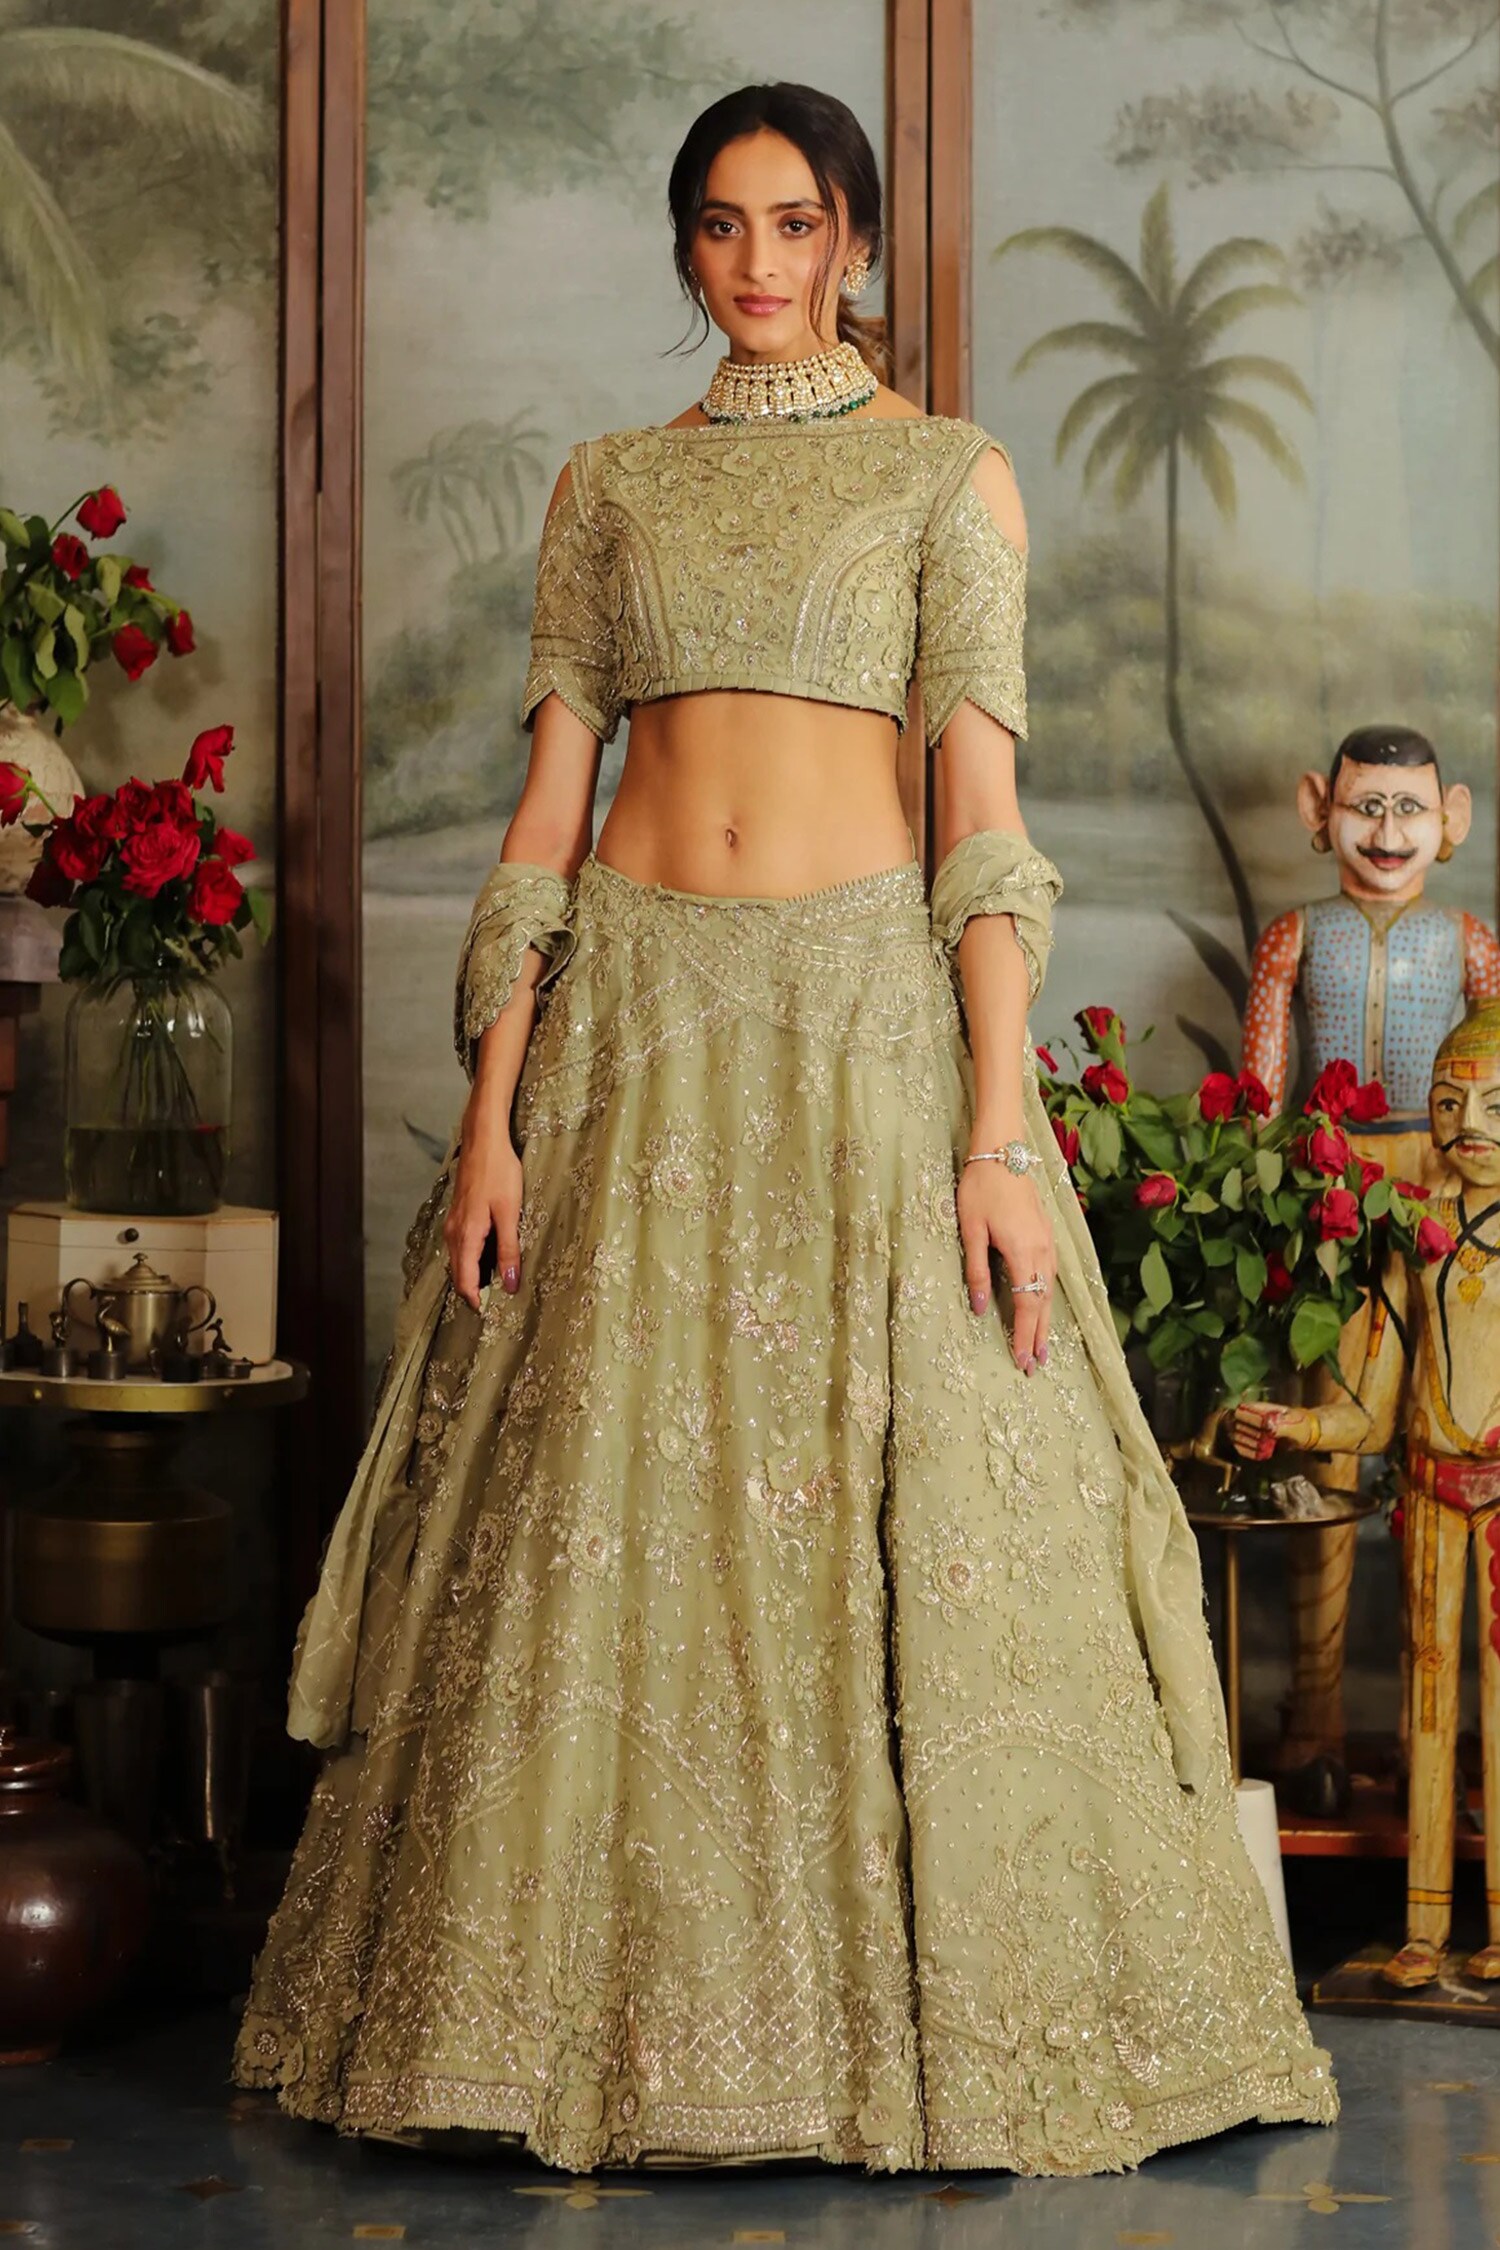 Manish Malhotra decodes Alia Bhatt's mehendi outfit